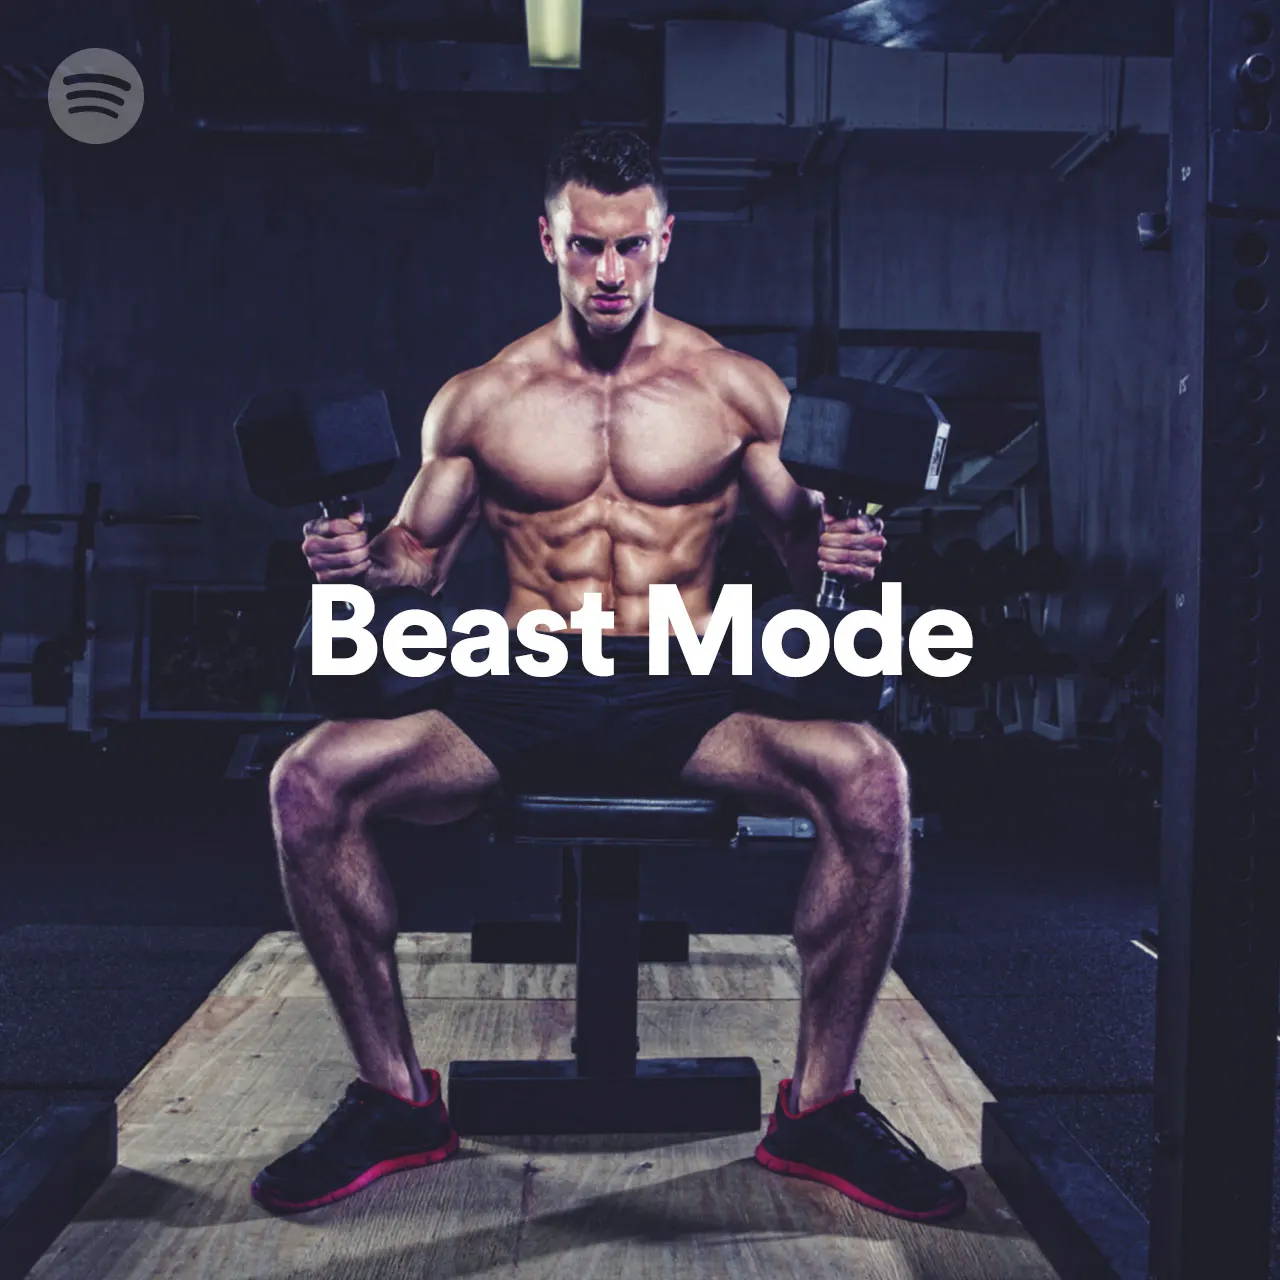 Beast mode bottom